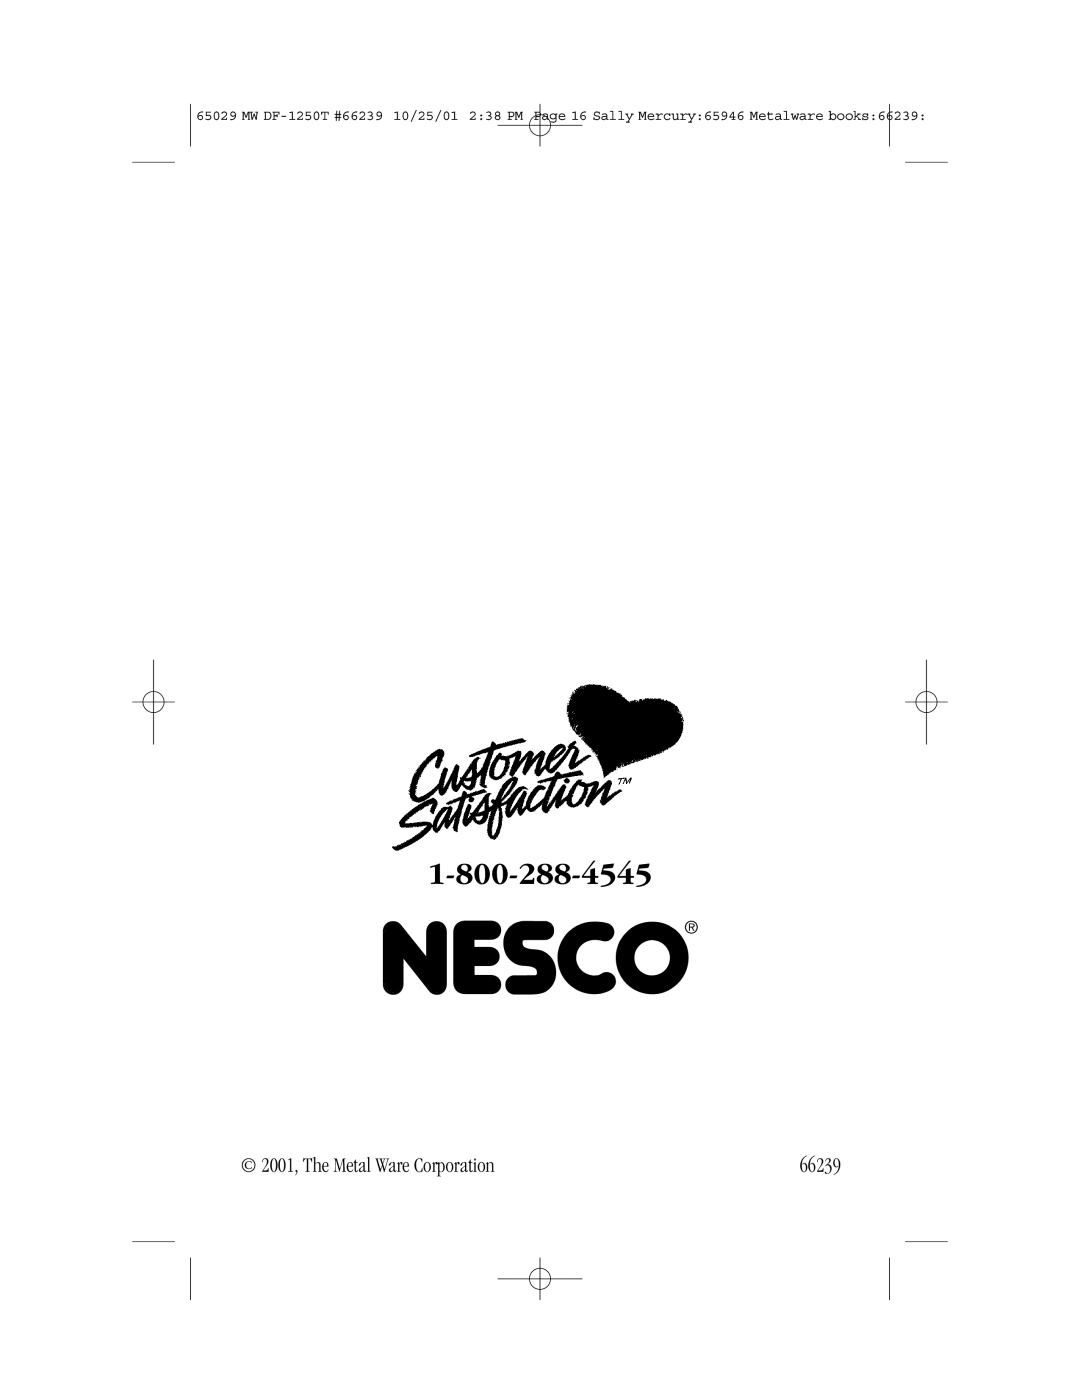 Nesco DF-1250T manual 2001, The Metal Ware Corporation, 66239 